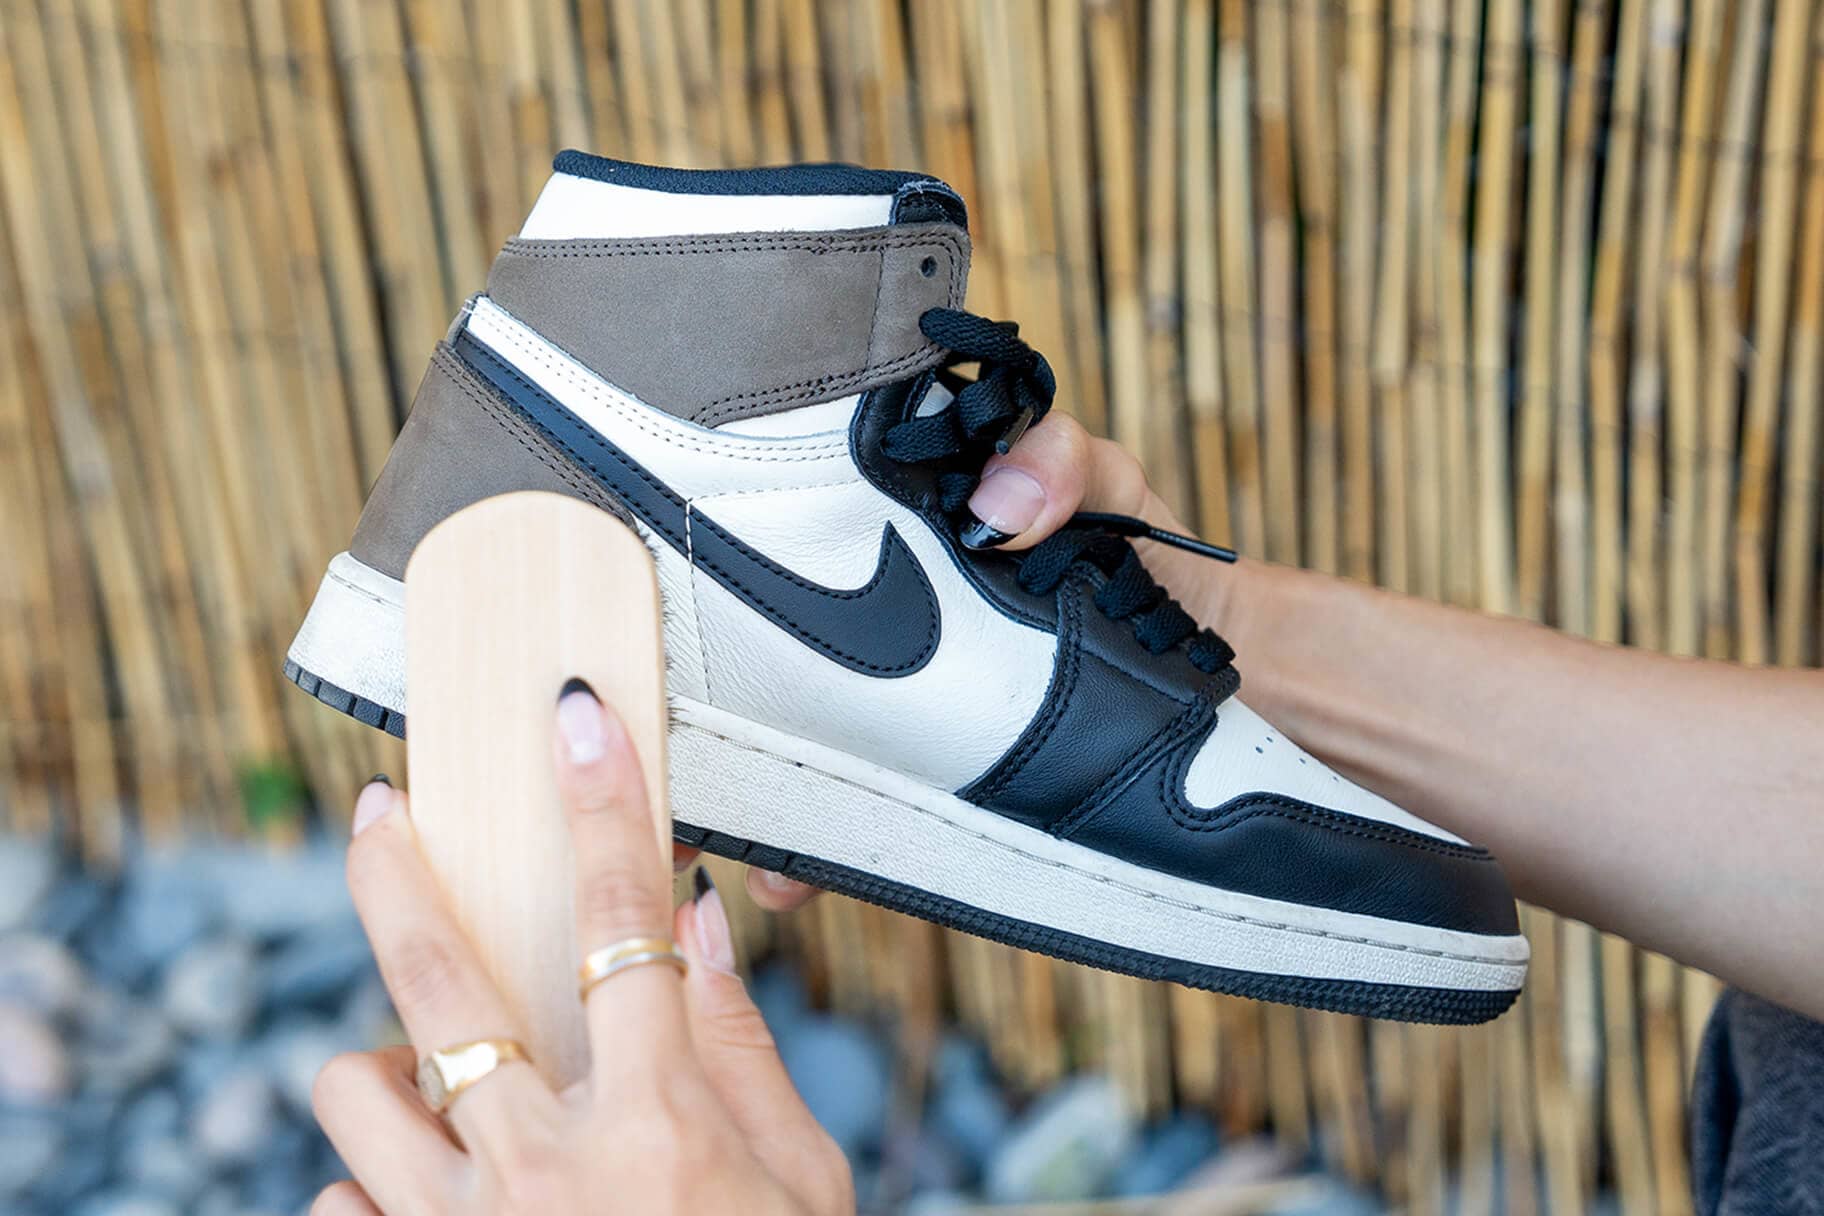 Atrás, atrás, atrás parte Resistente Hundimiento Cómo limpiar tu calzado en 6 pasos fáciles. Nike